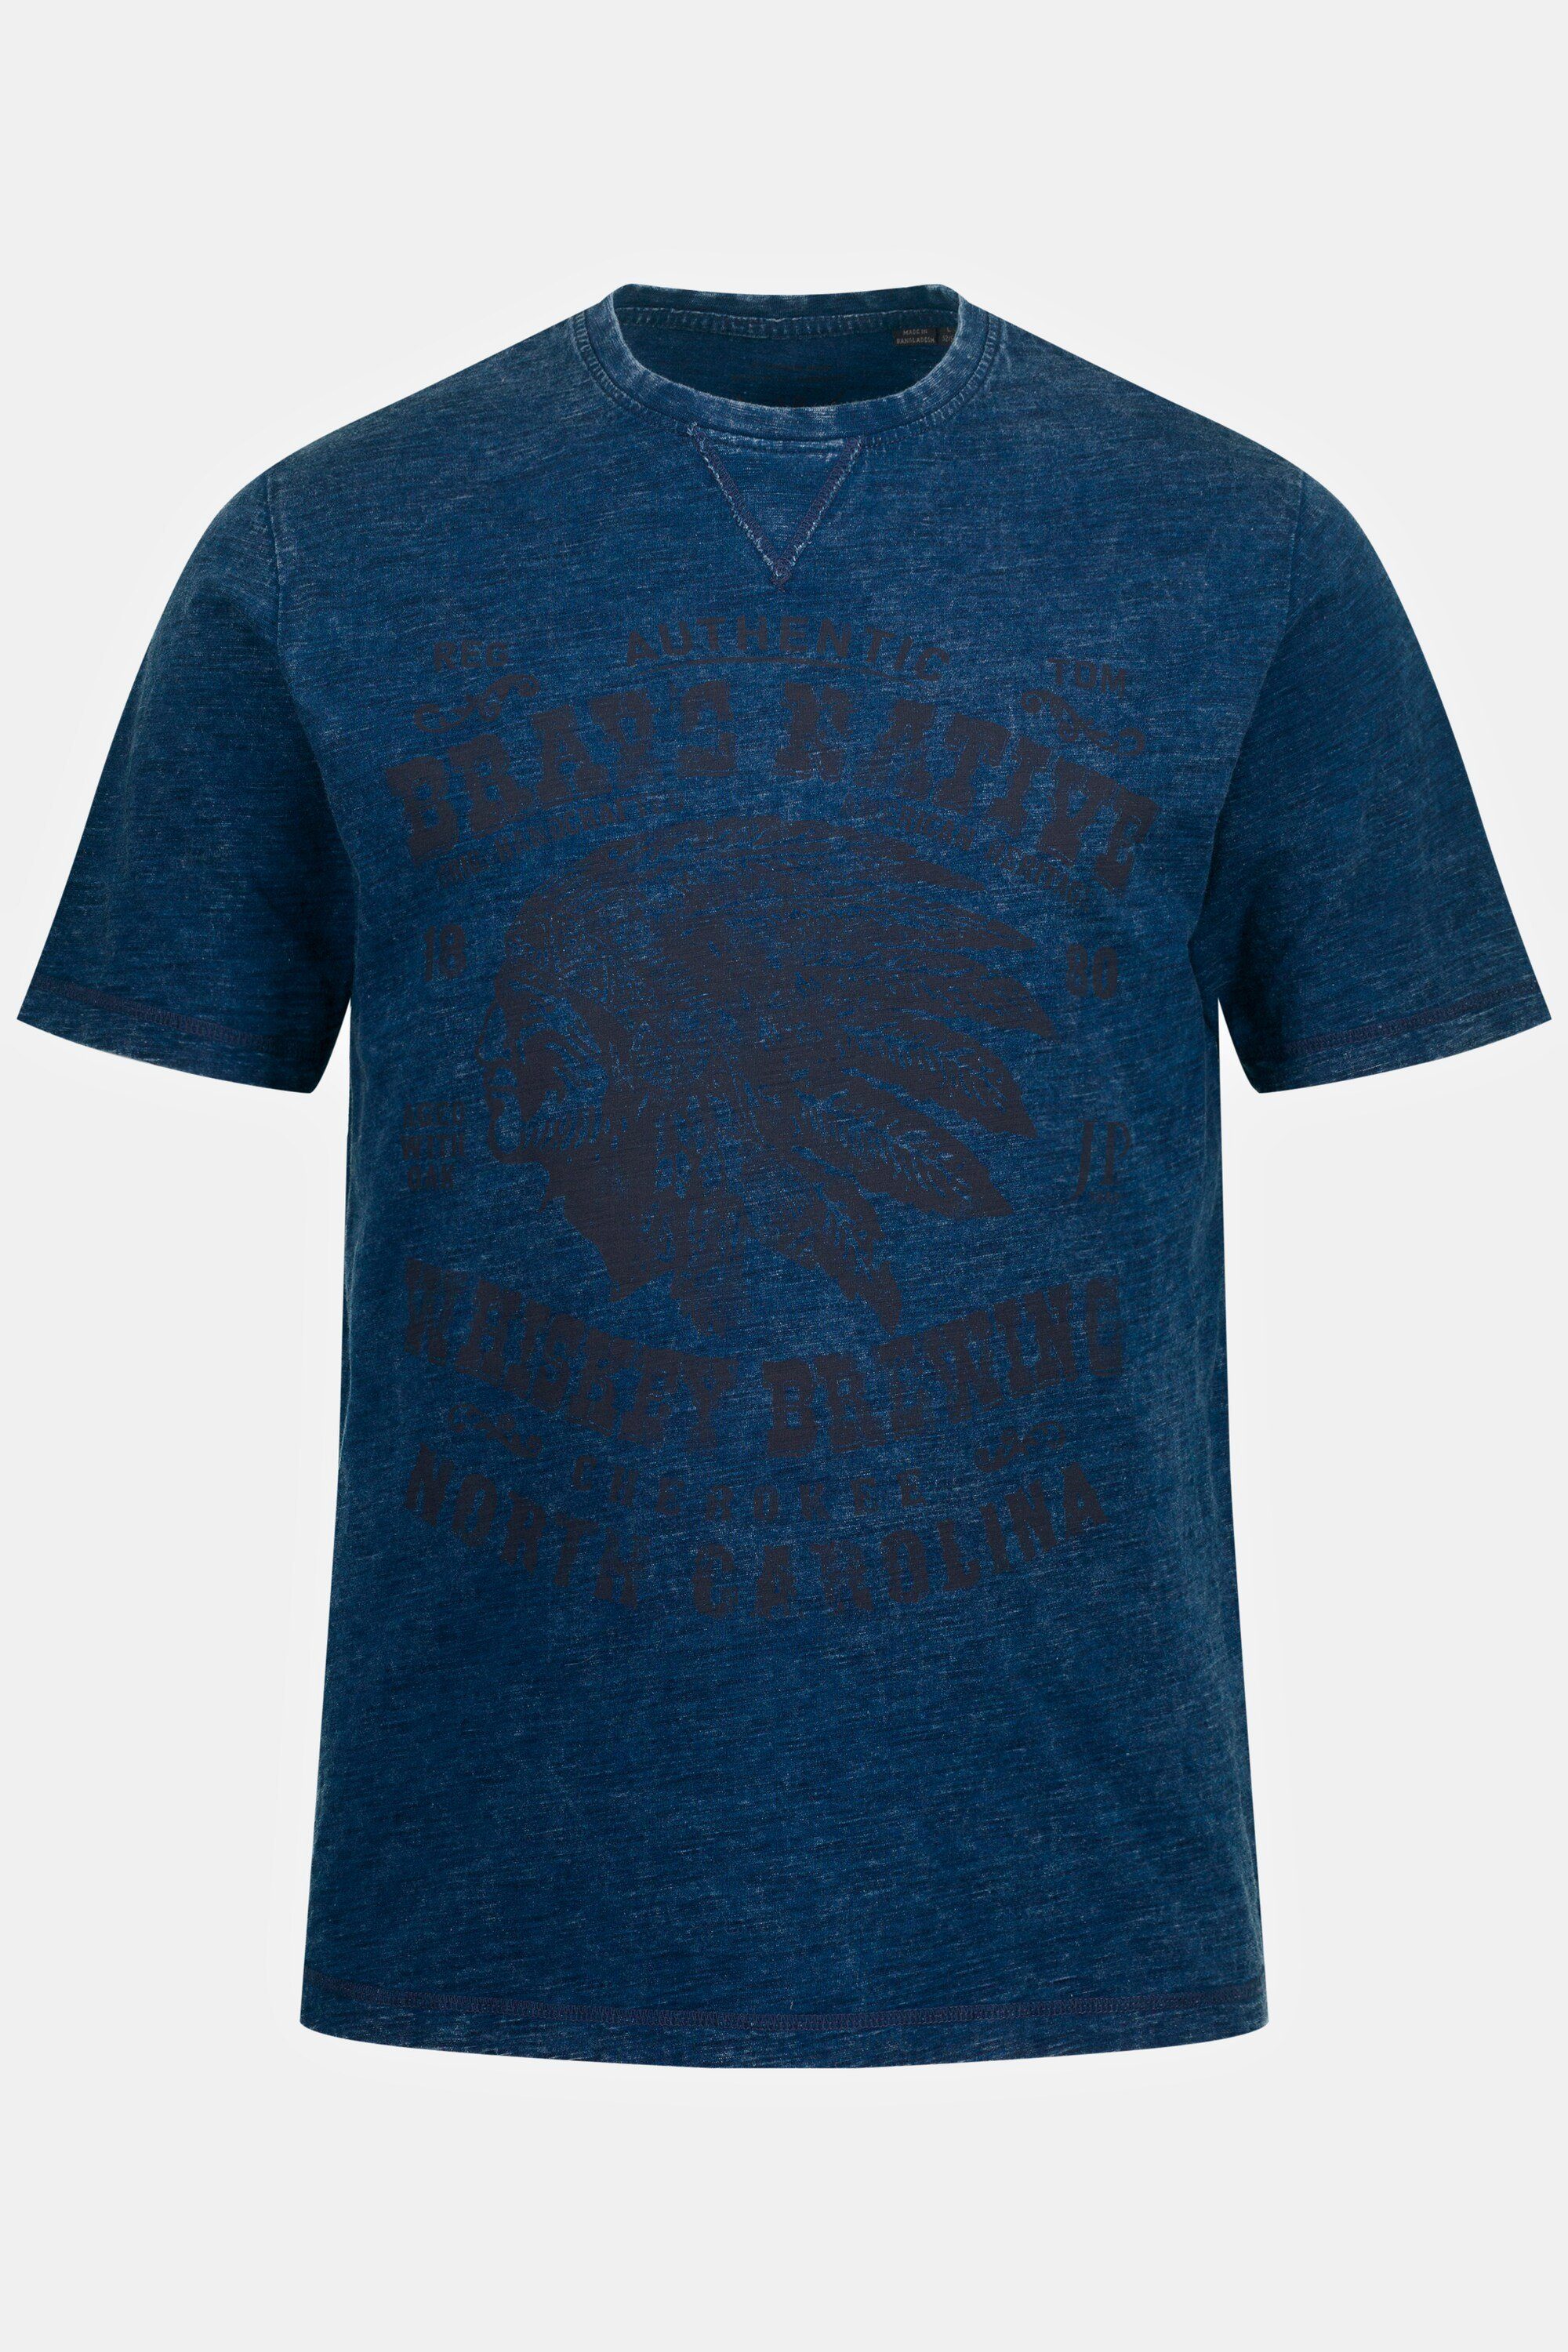 JP1880 Halbarm T-Shirt Indigo-Färbung Print Rundhals T-Shirt